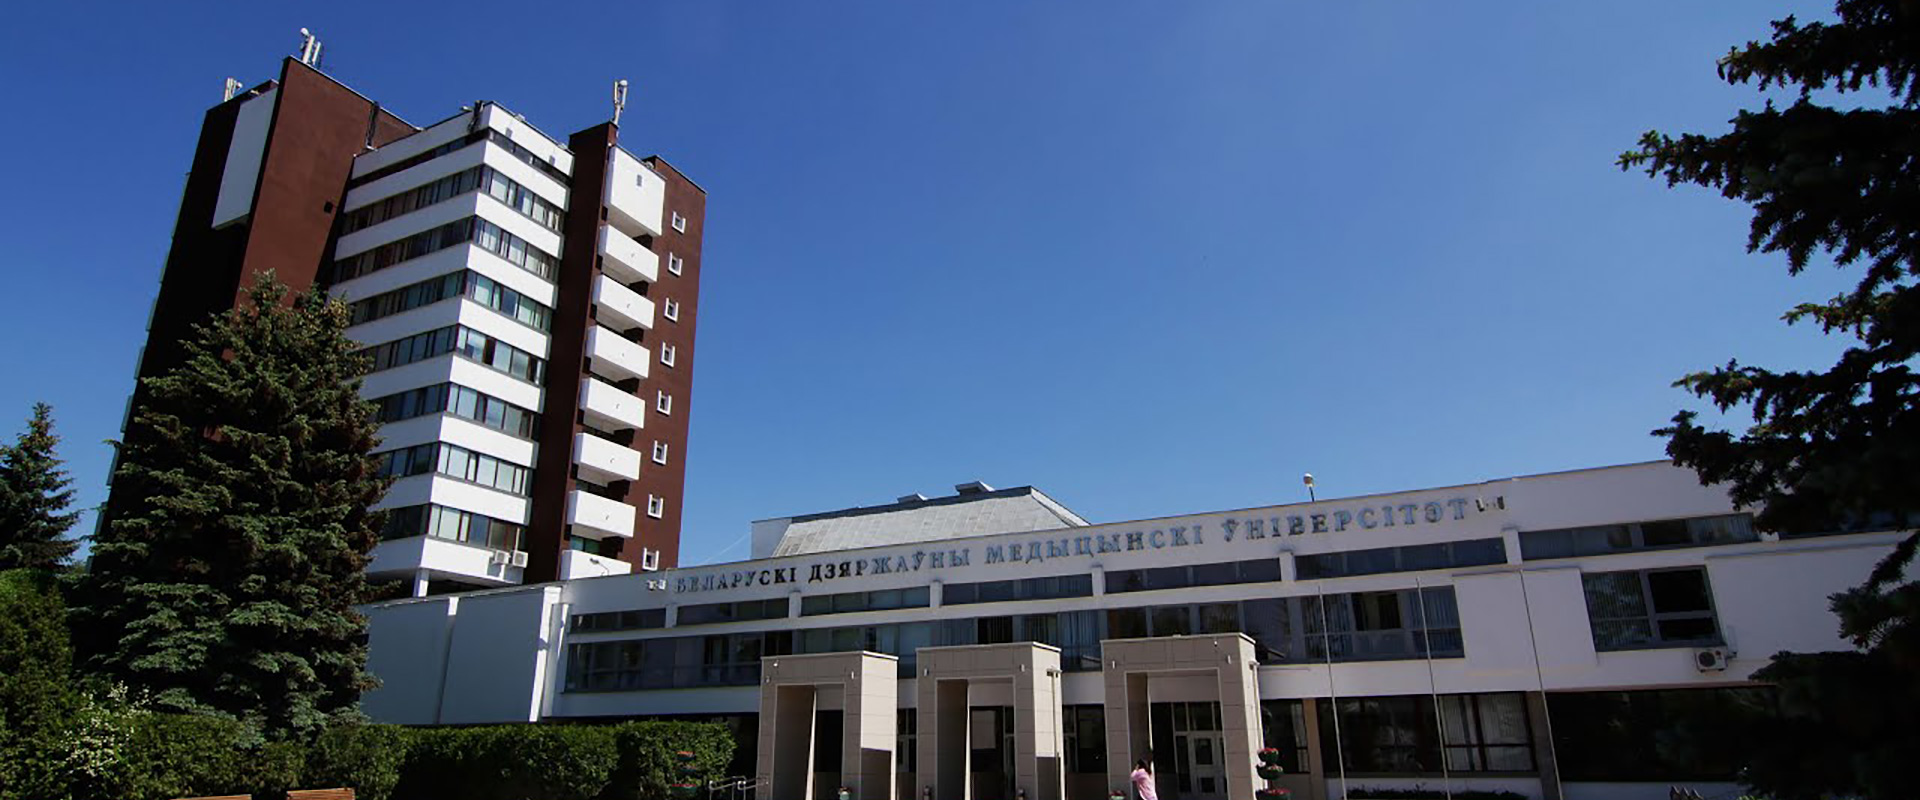 Belarus State University of Medical Sciences - مهاجرت تحصیلی به بلاروس